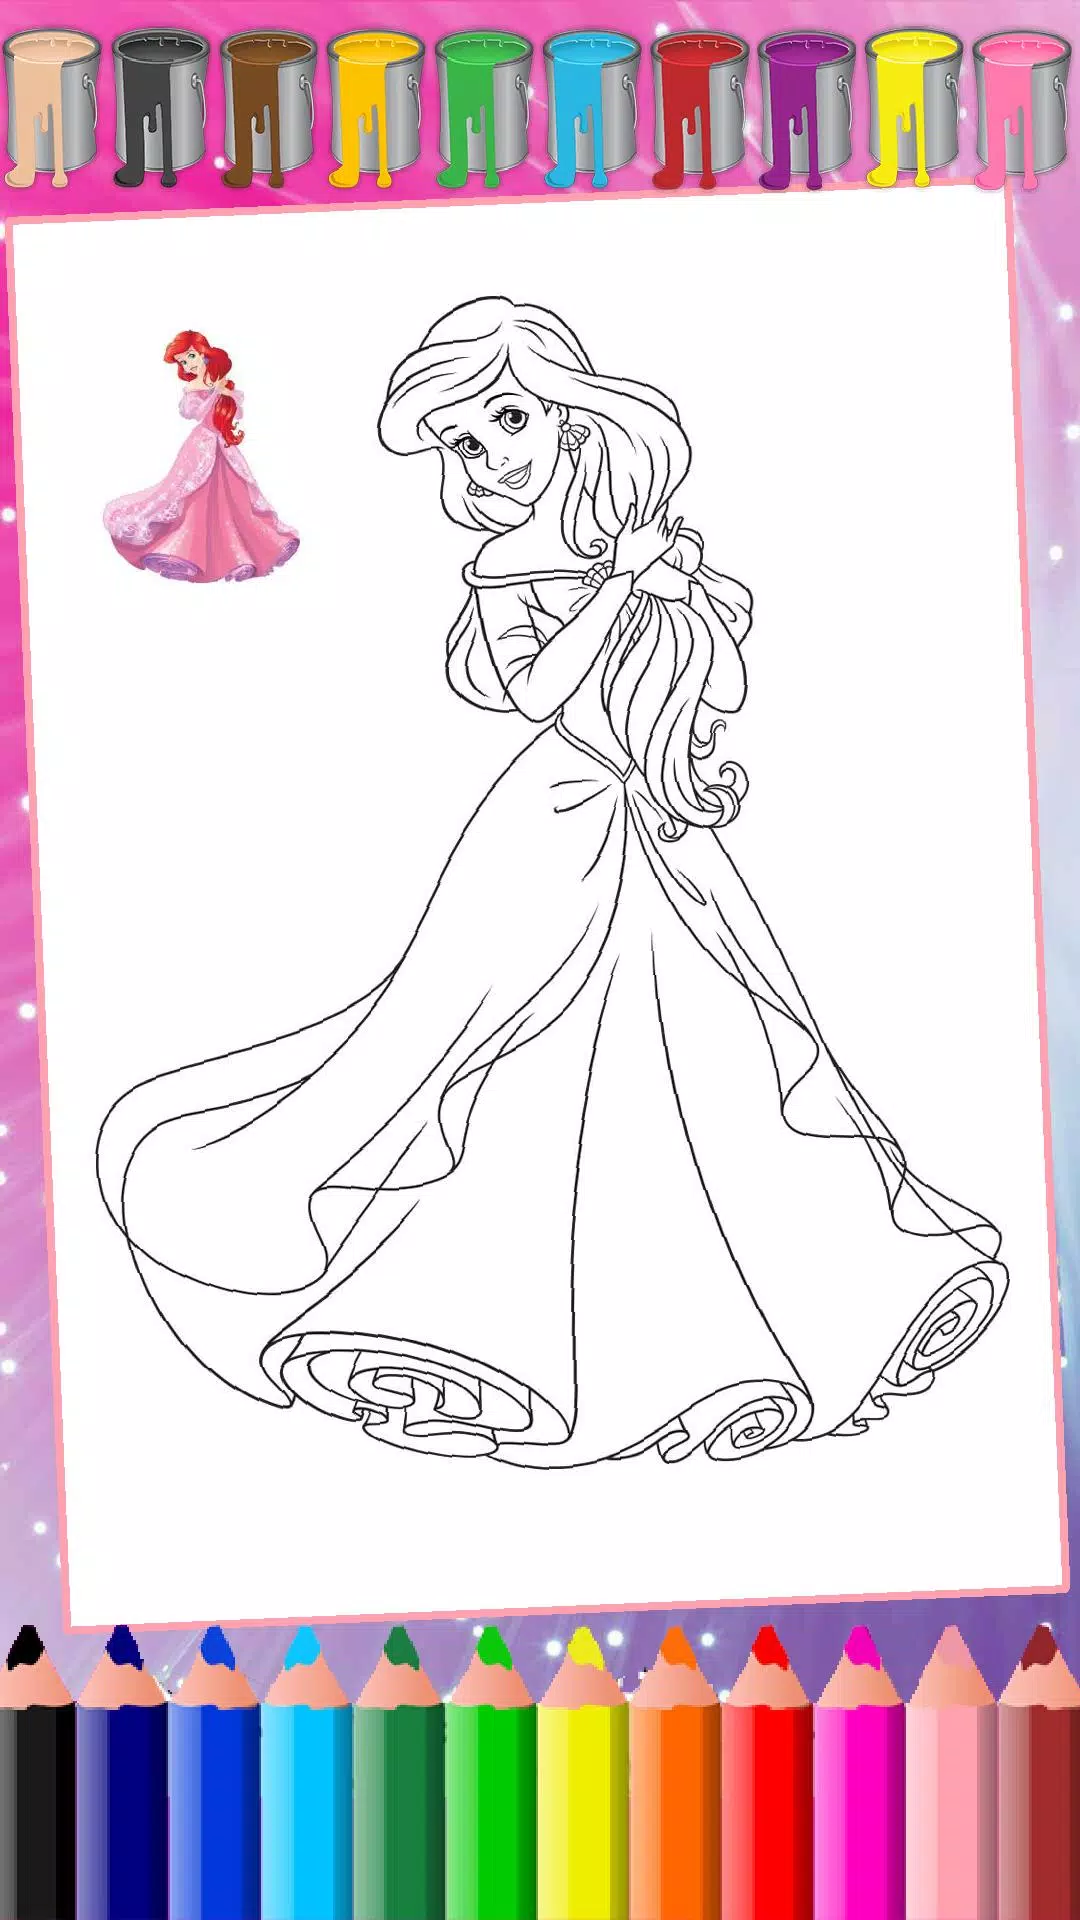 Descarga de APK de Juego de colorear princesa para Android